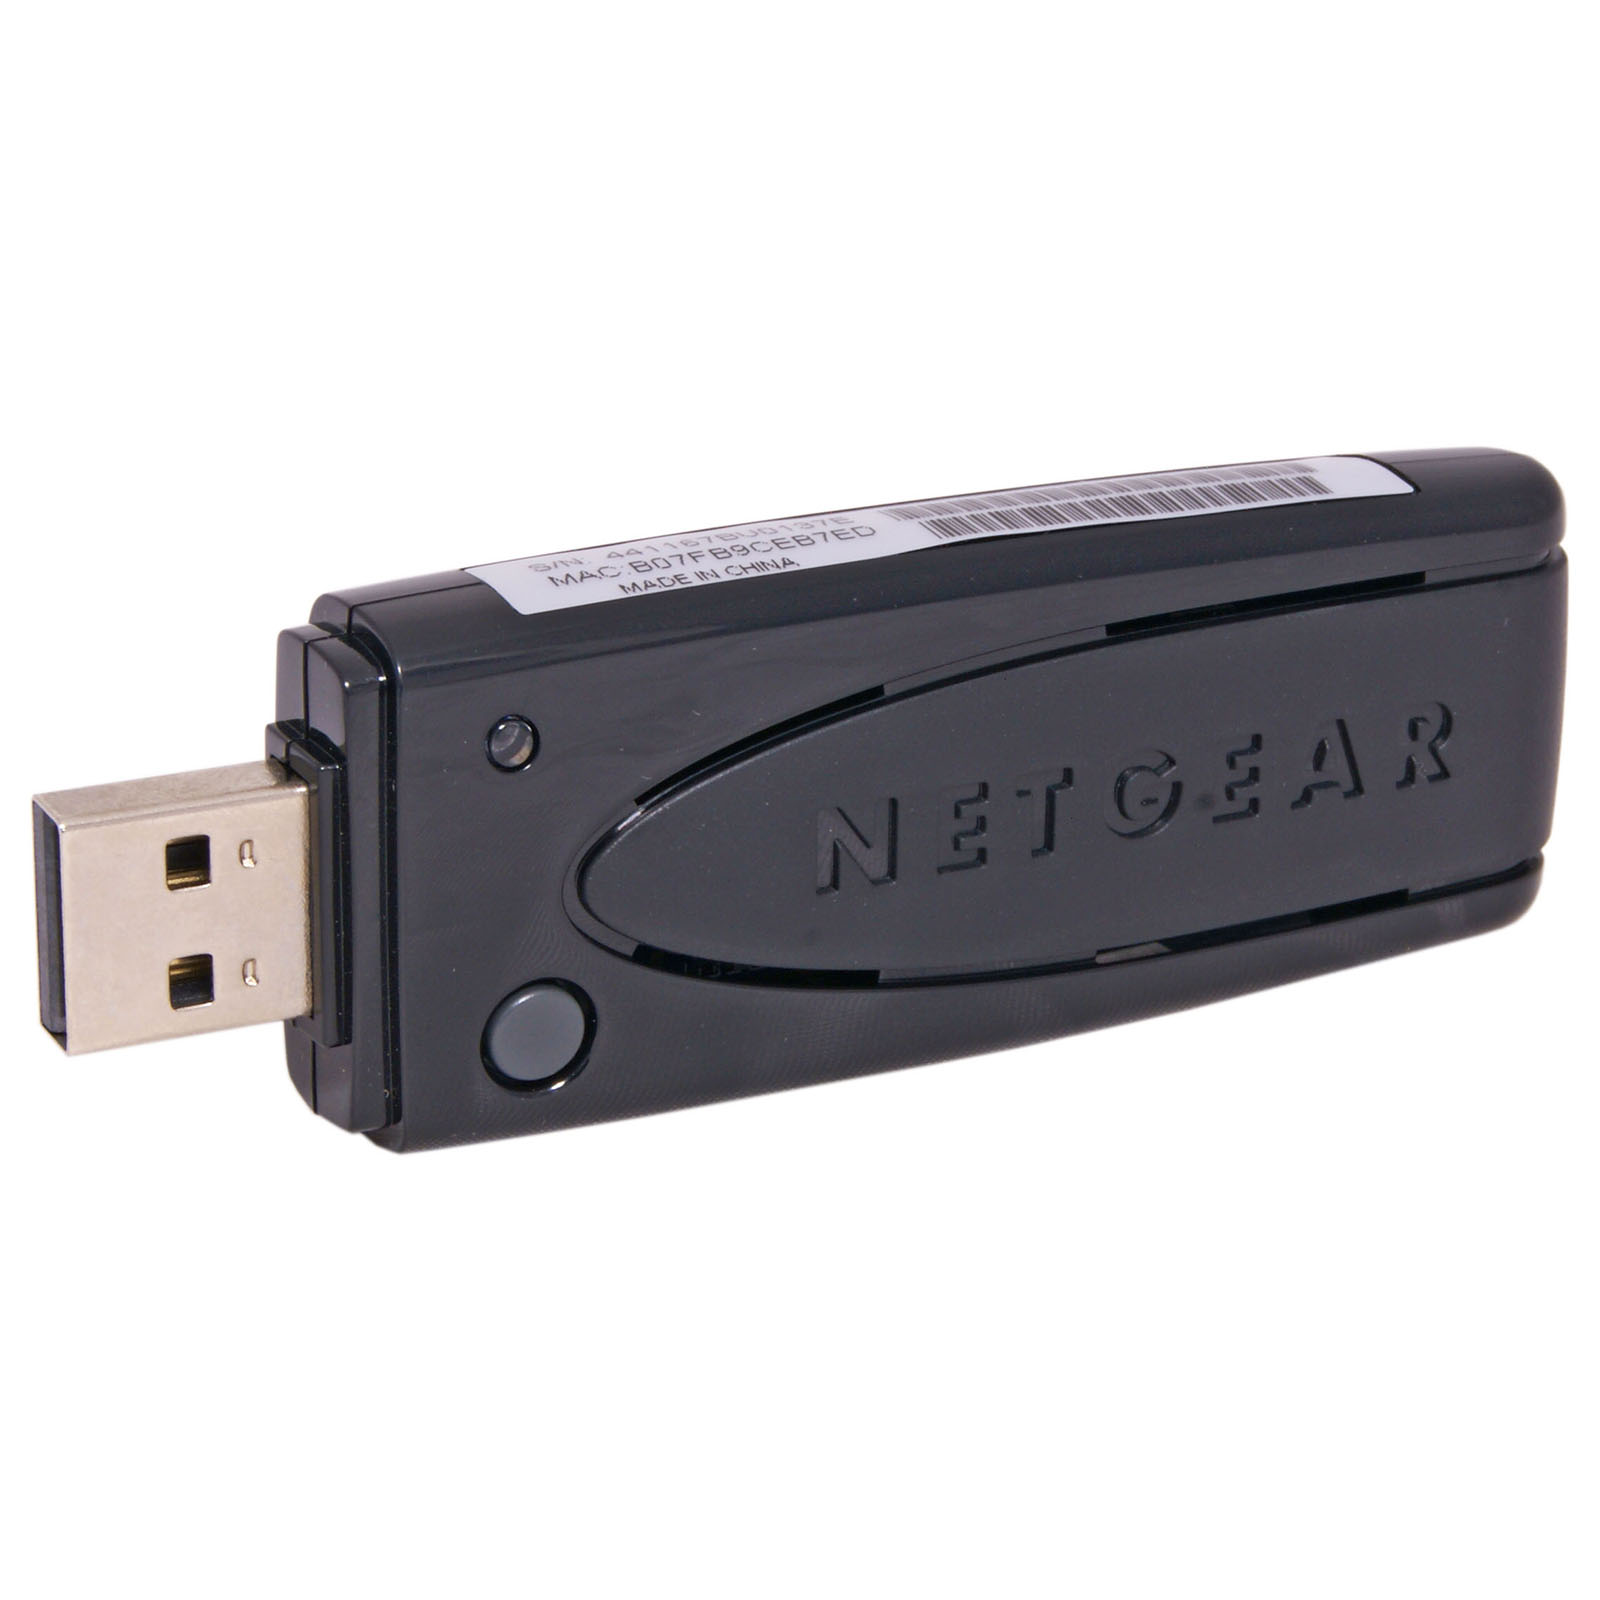 wnda3100v2 remote download wireless adapter